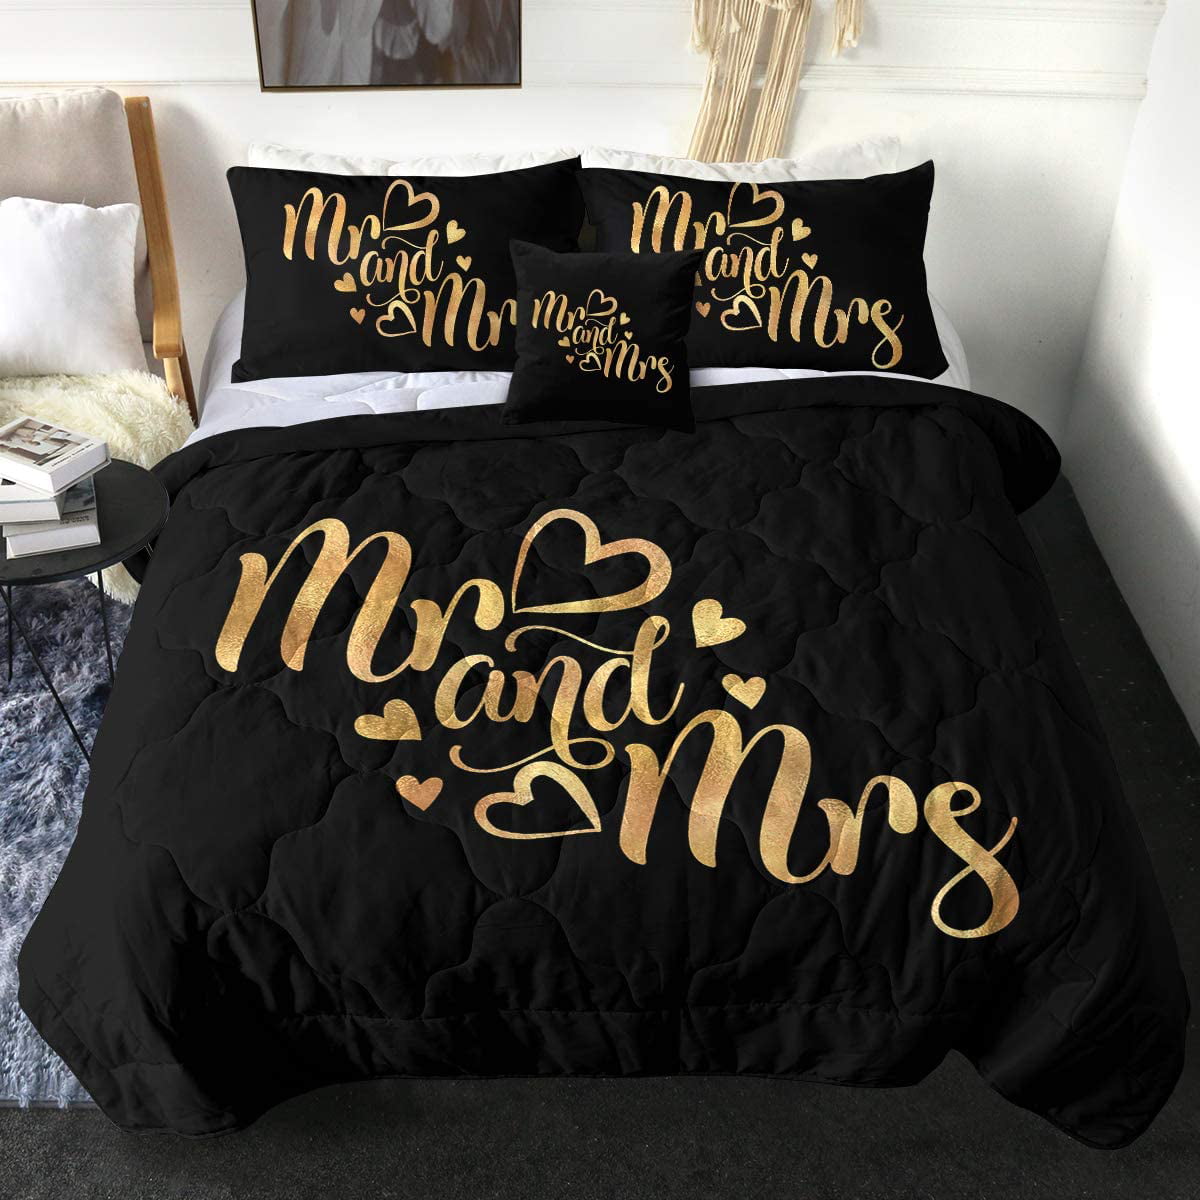 Details about   Quilt Sets Comforter Bedspread Bedding Set Throw Blanket Sheets Full Queen King 